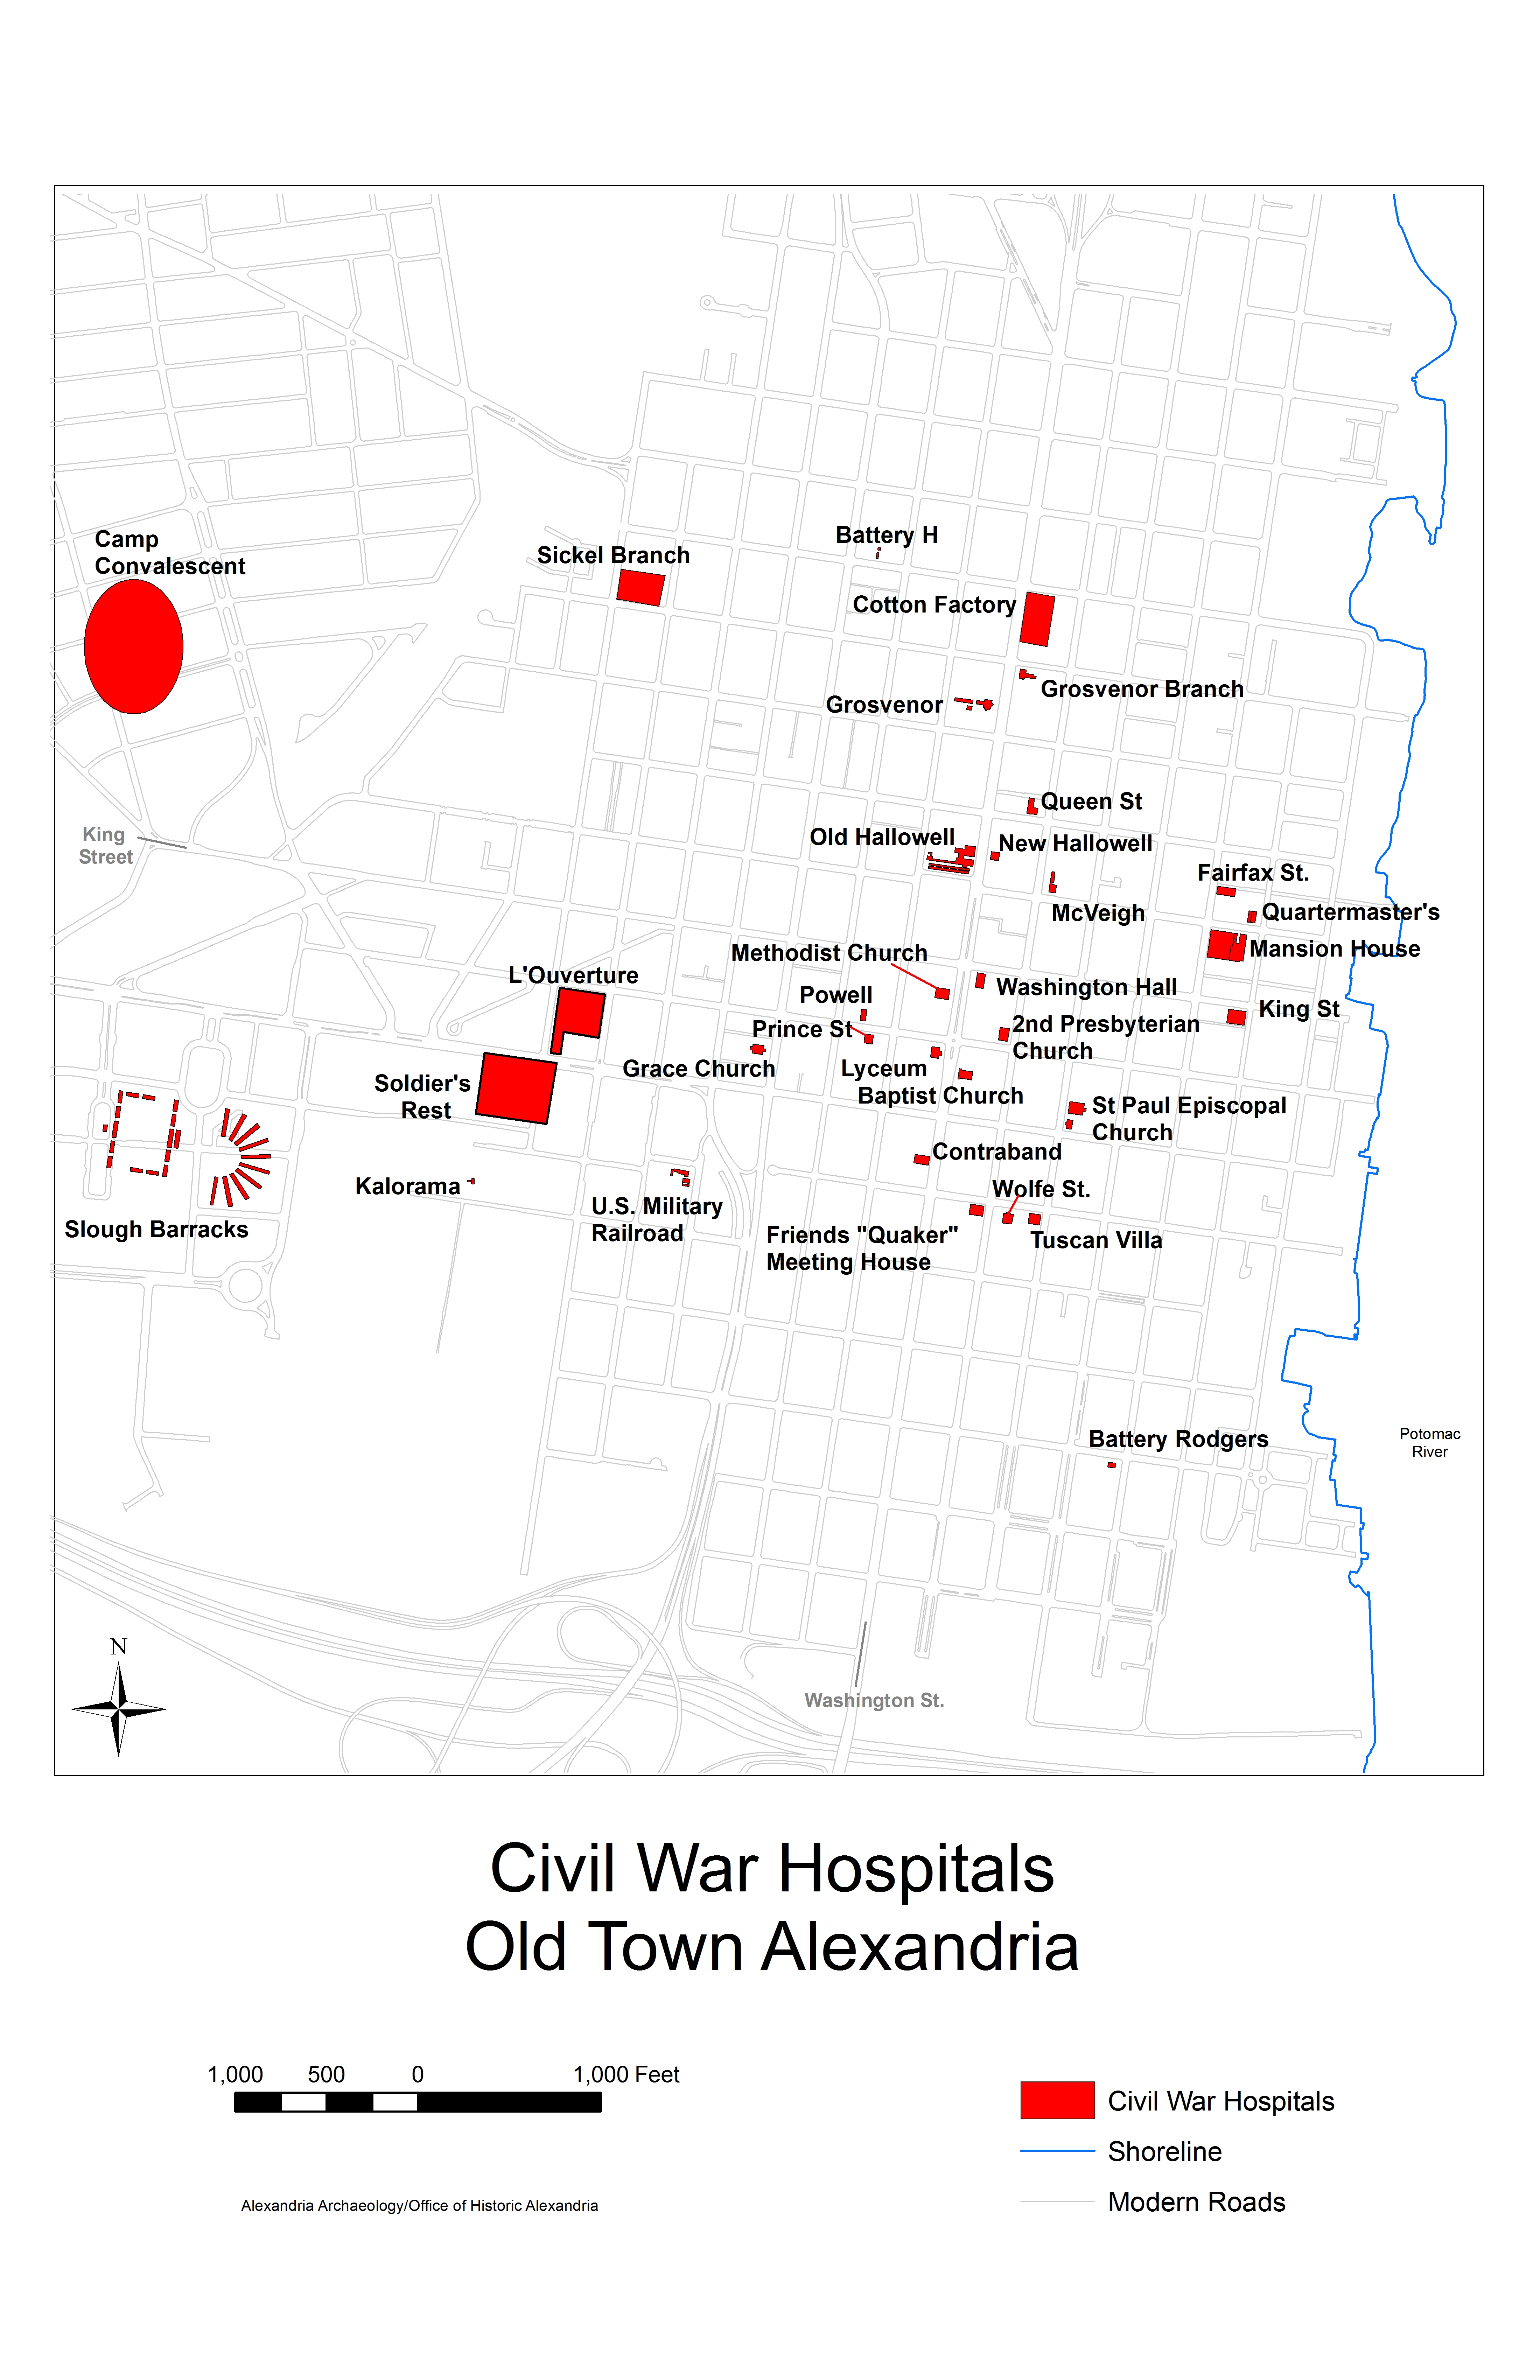 Civil War Hospitals Map, Old Town